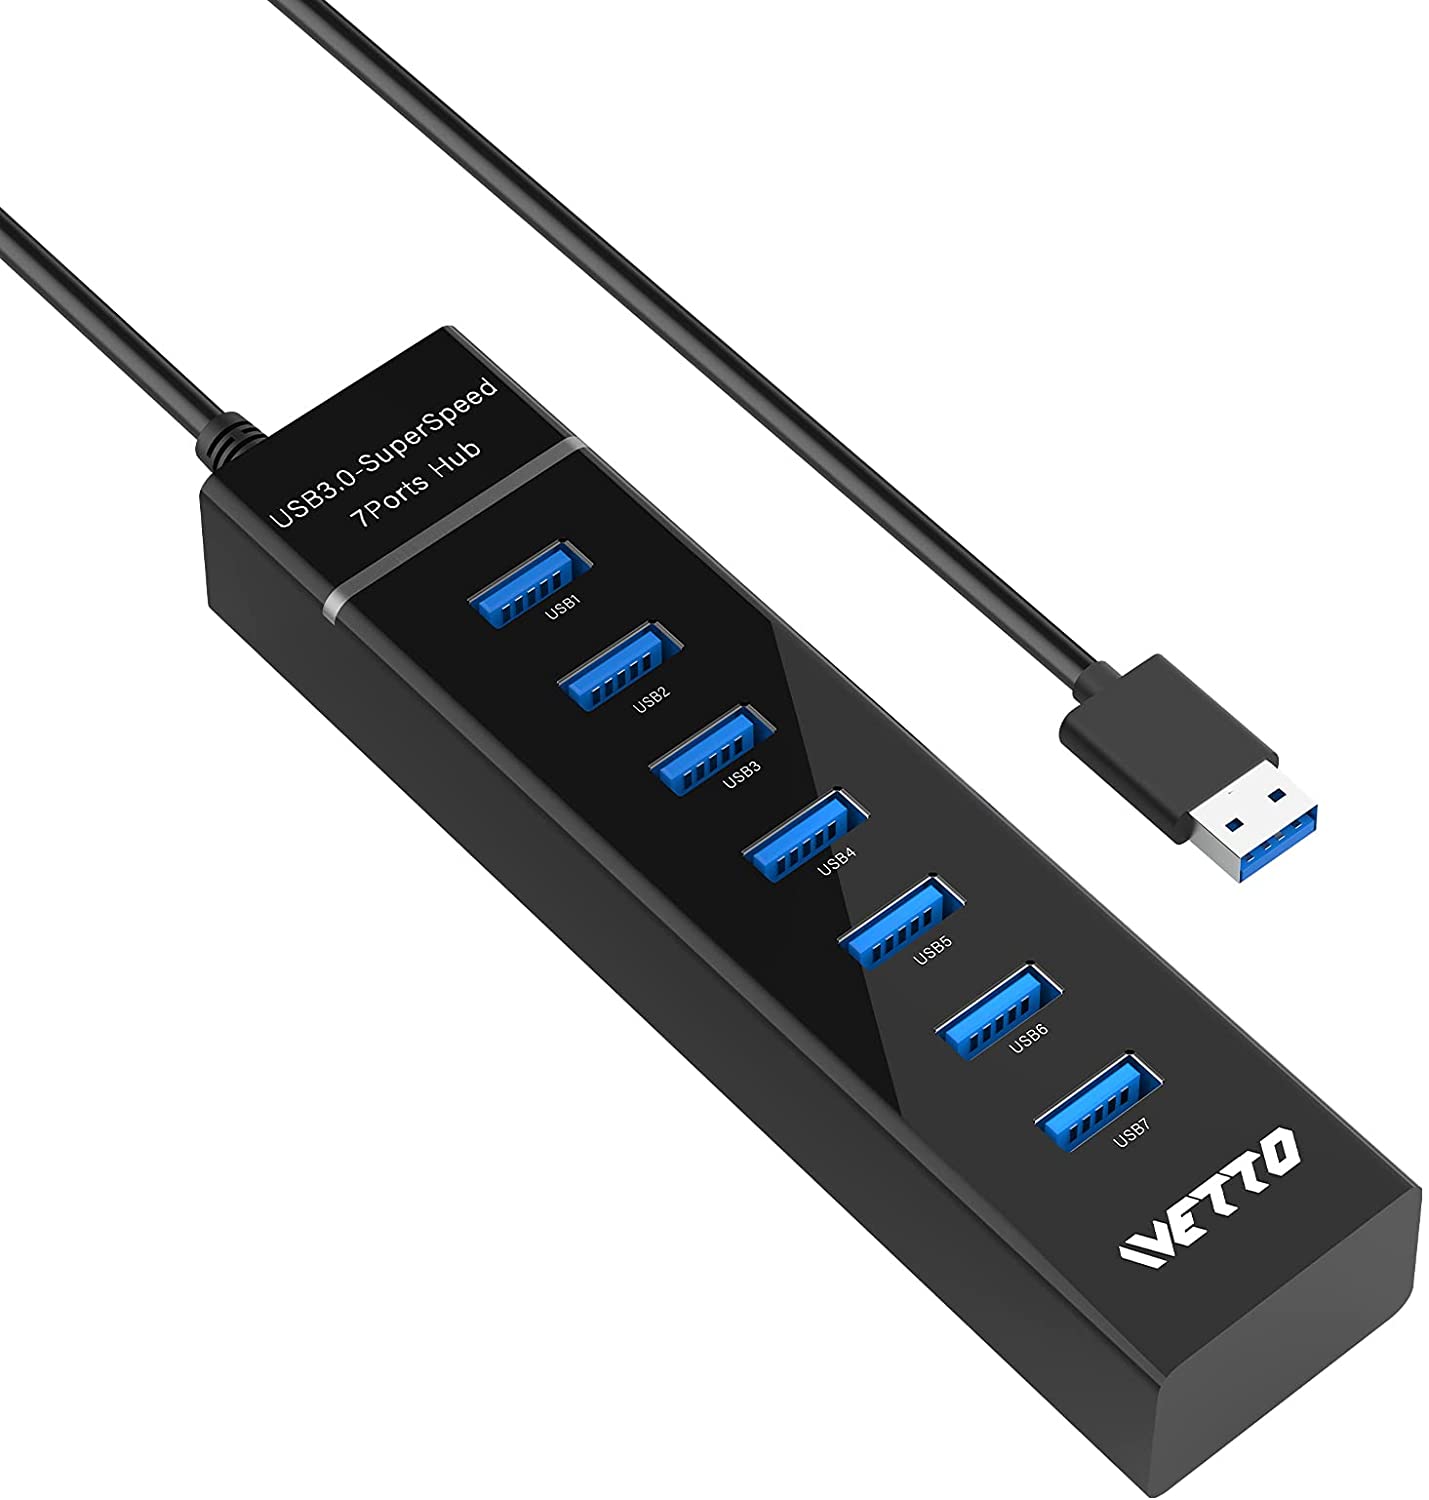 7-Port USB 3.0 Hub - IVETTO Data Hub USB Splitter with Long Cable 38-inch.  (NC)